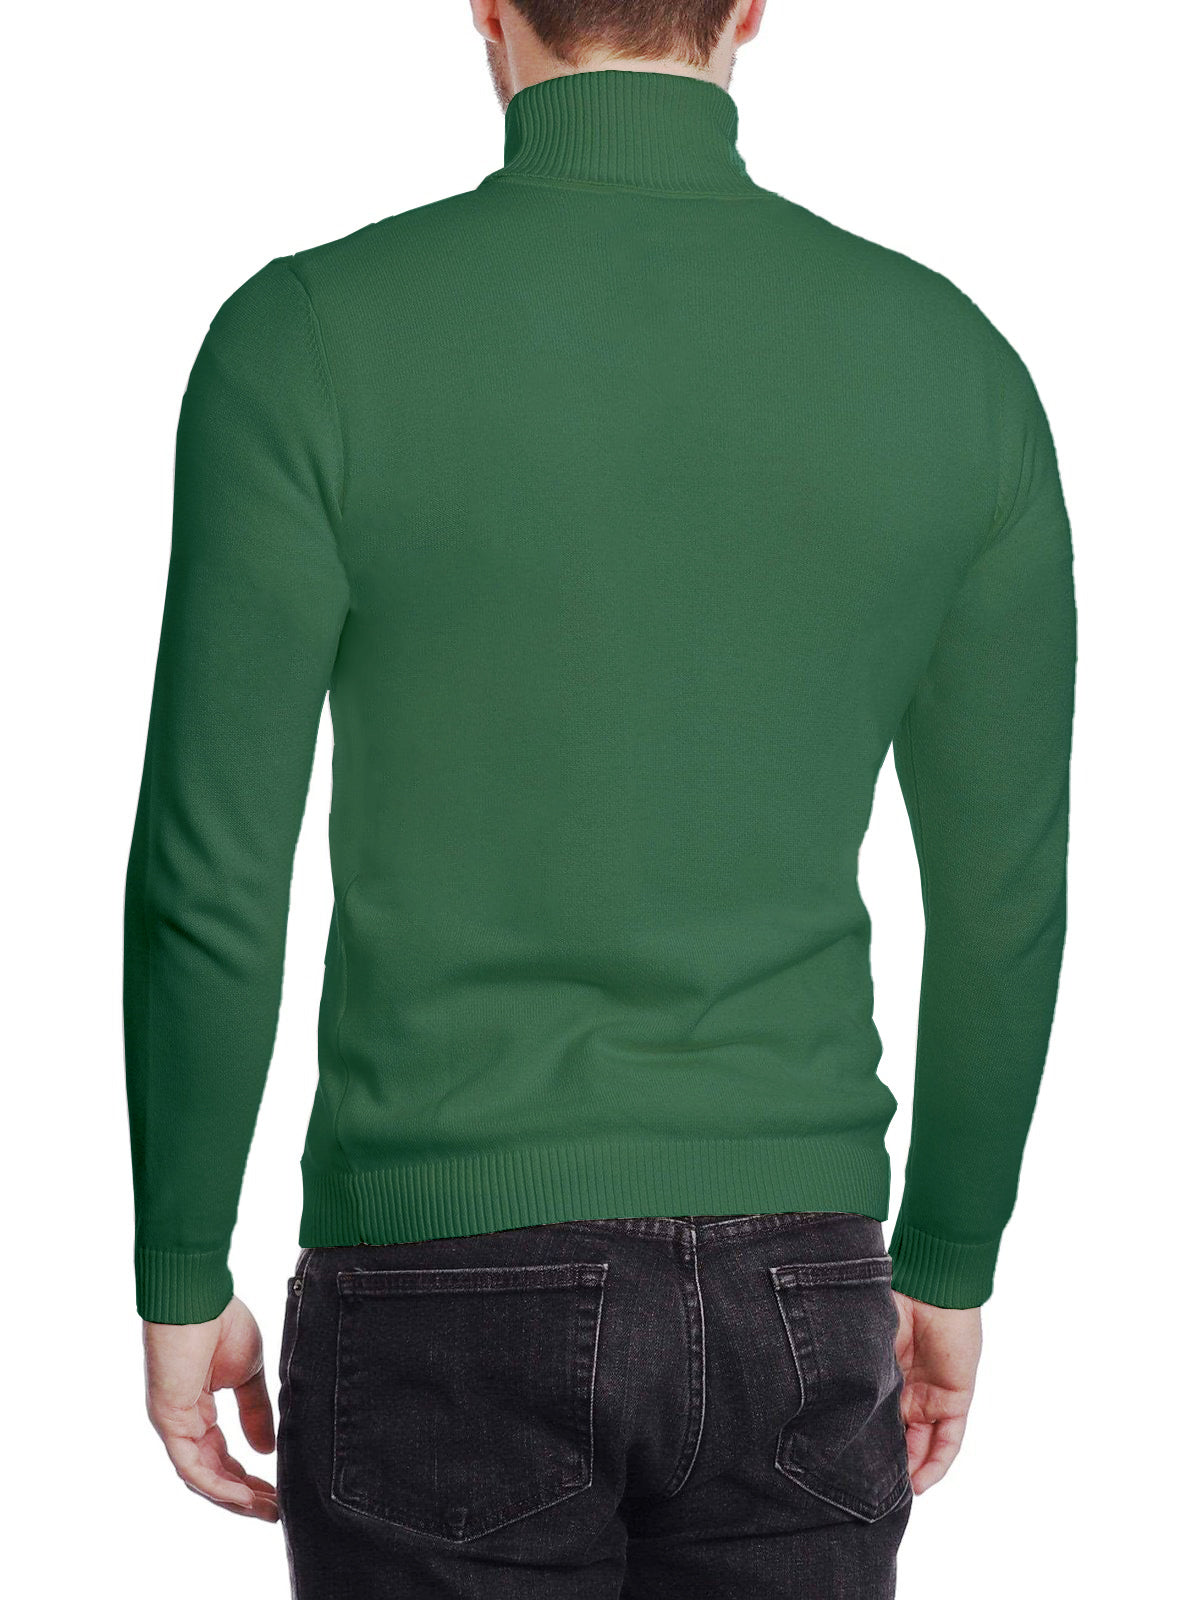 Arthur Black Men's Solid Hunter Green Pullover Cotton Blend Turtleneck Sweater